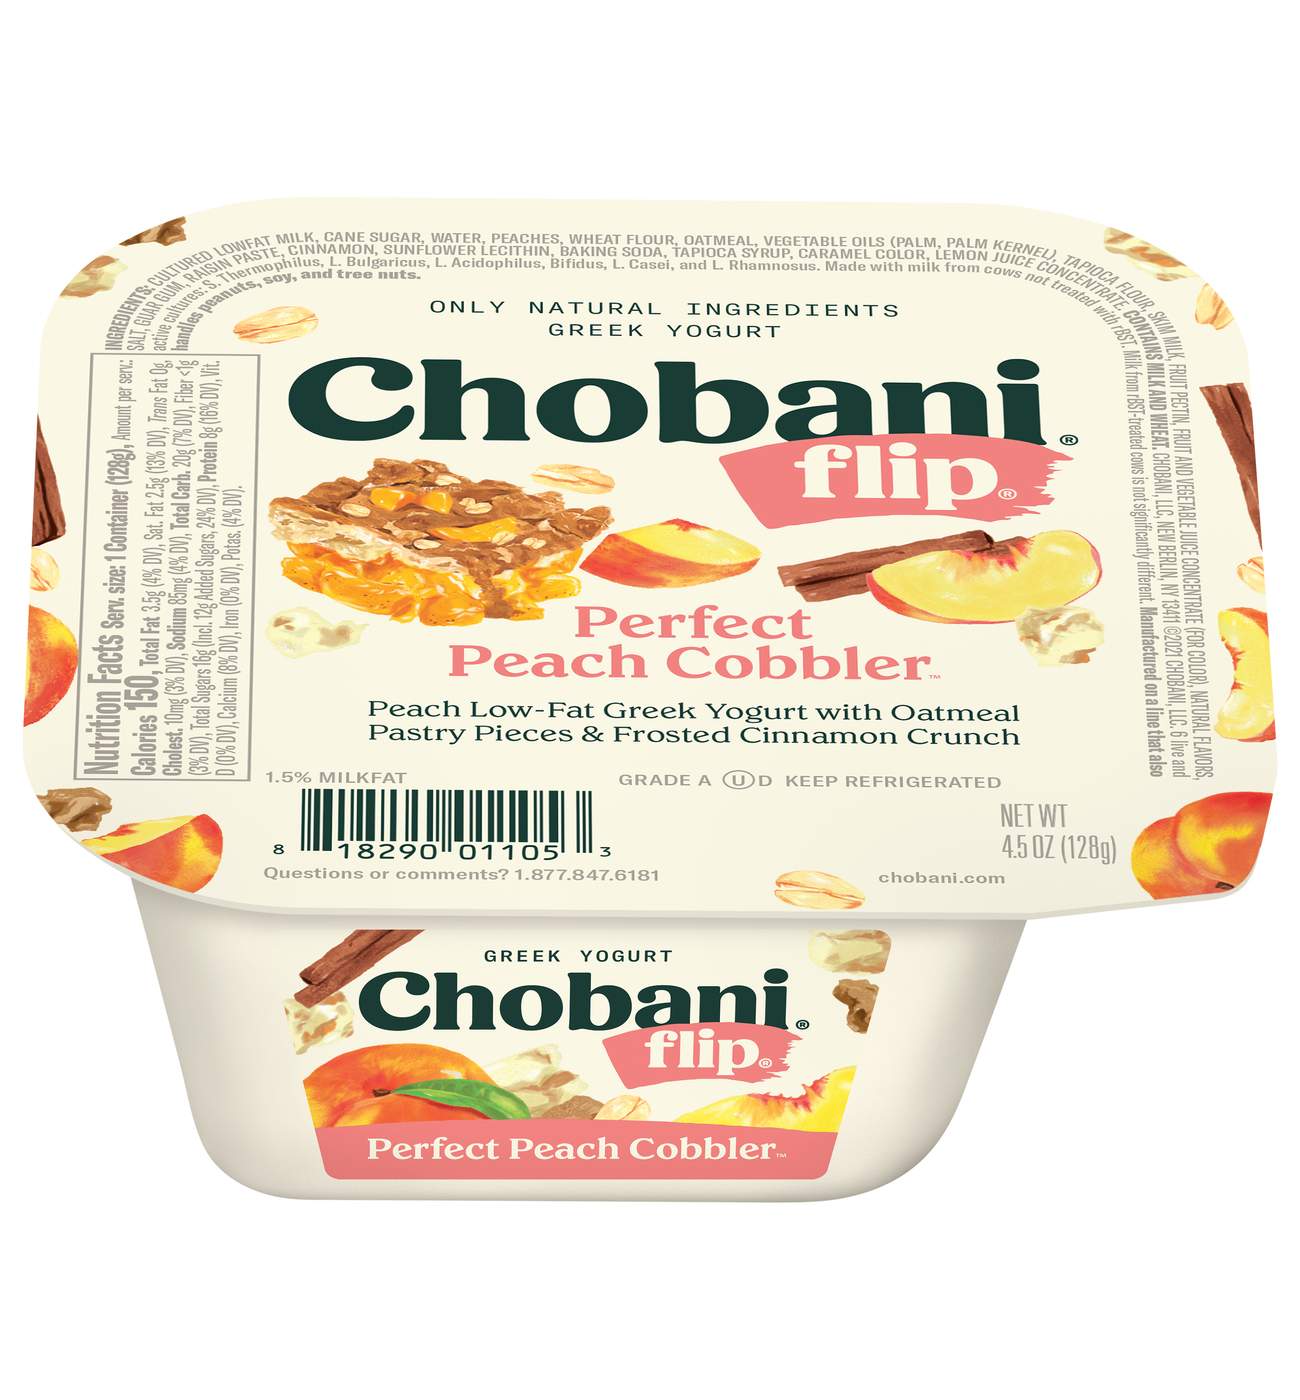 Chobani Flip Low-Fat Perfect Peach Cobbler Greek Yogurt; image 1 of 2